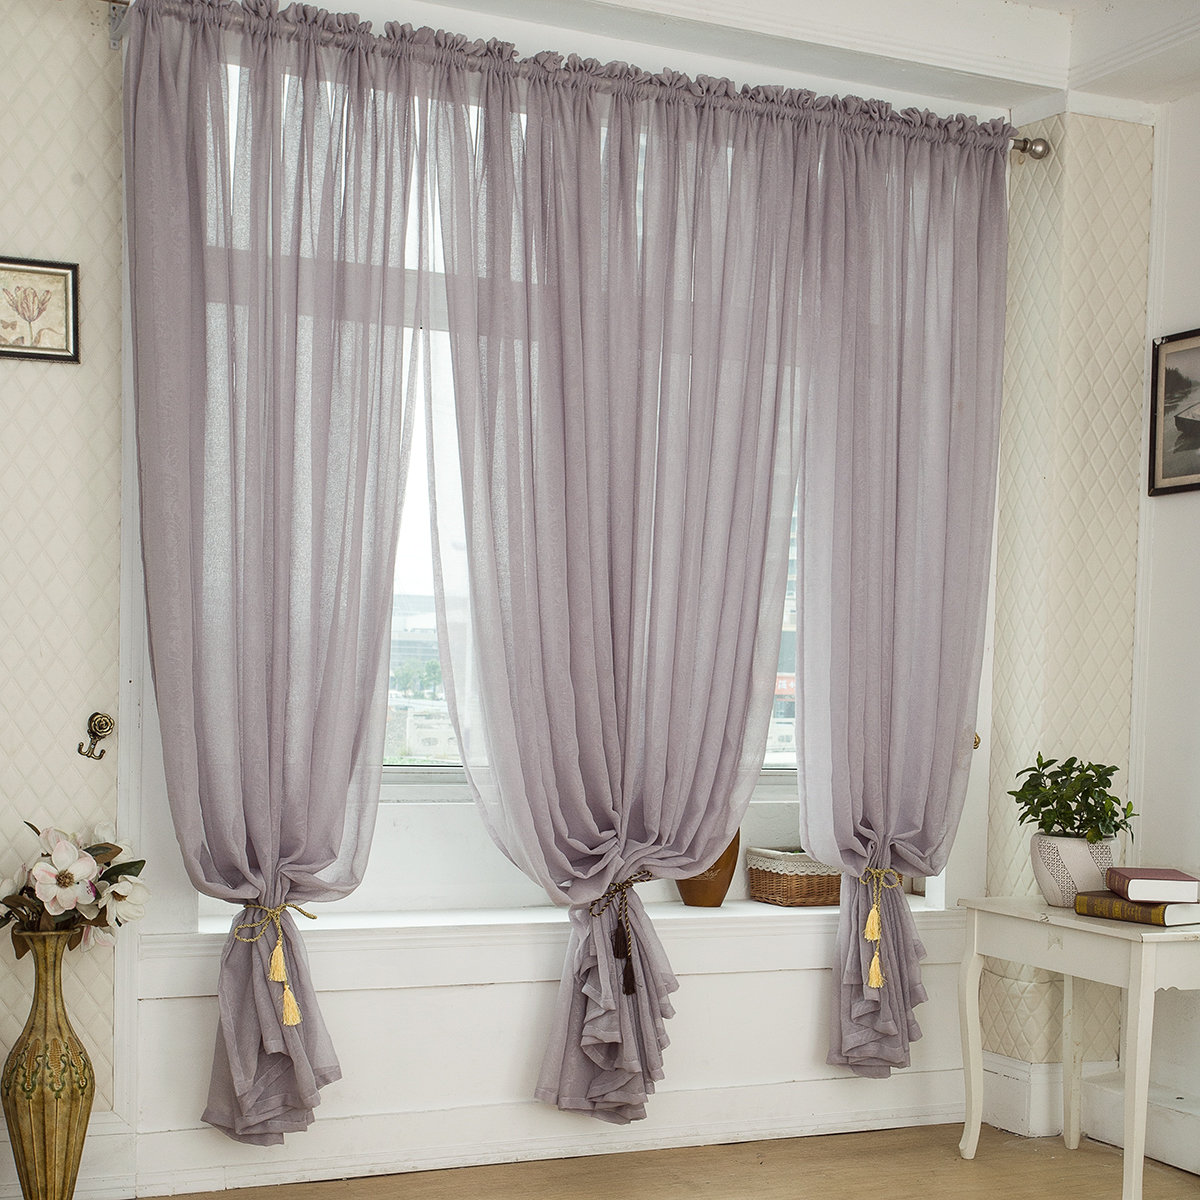 Curtain drawstring design